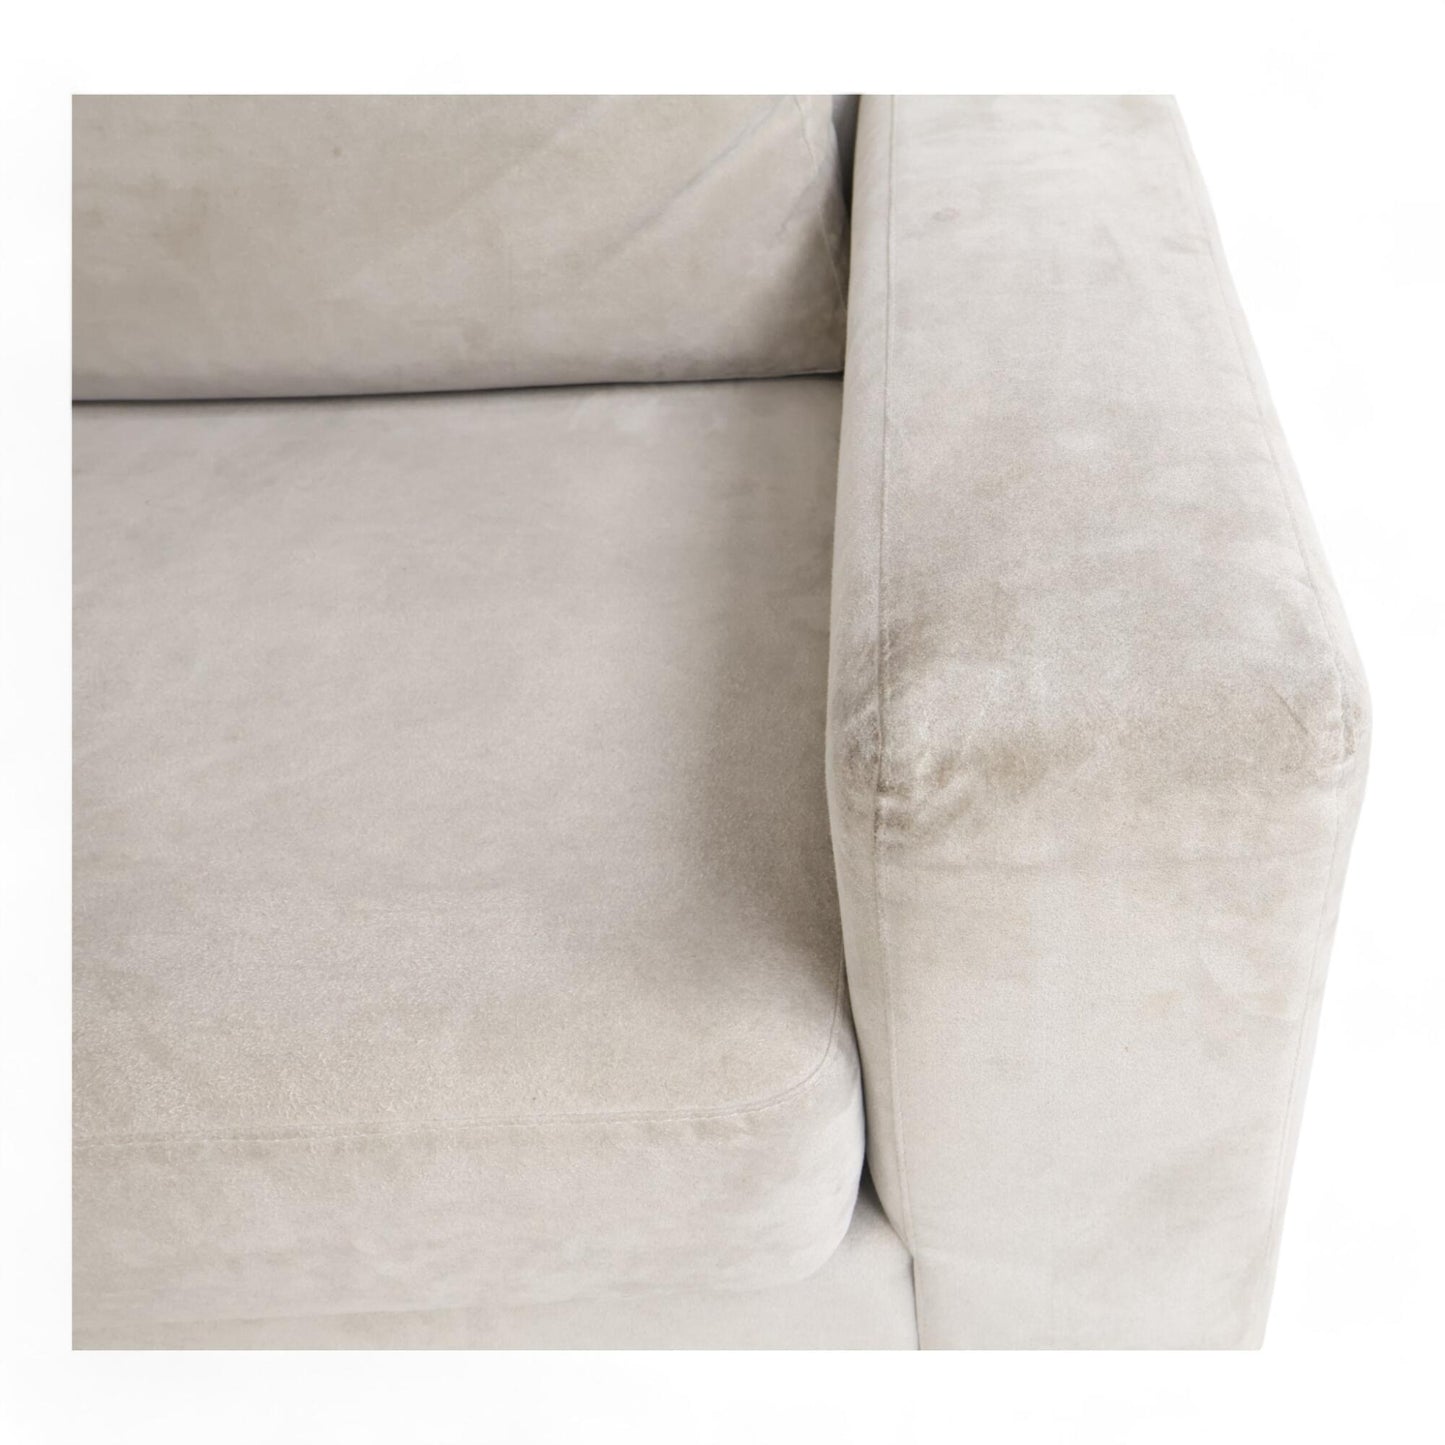 Nyrenset | Bolia Milano sofagruppe, 3-seter sofa, lenestol og puff